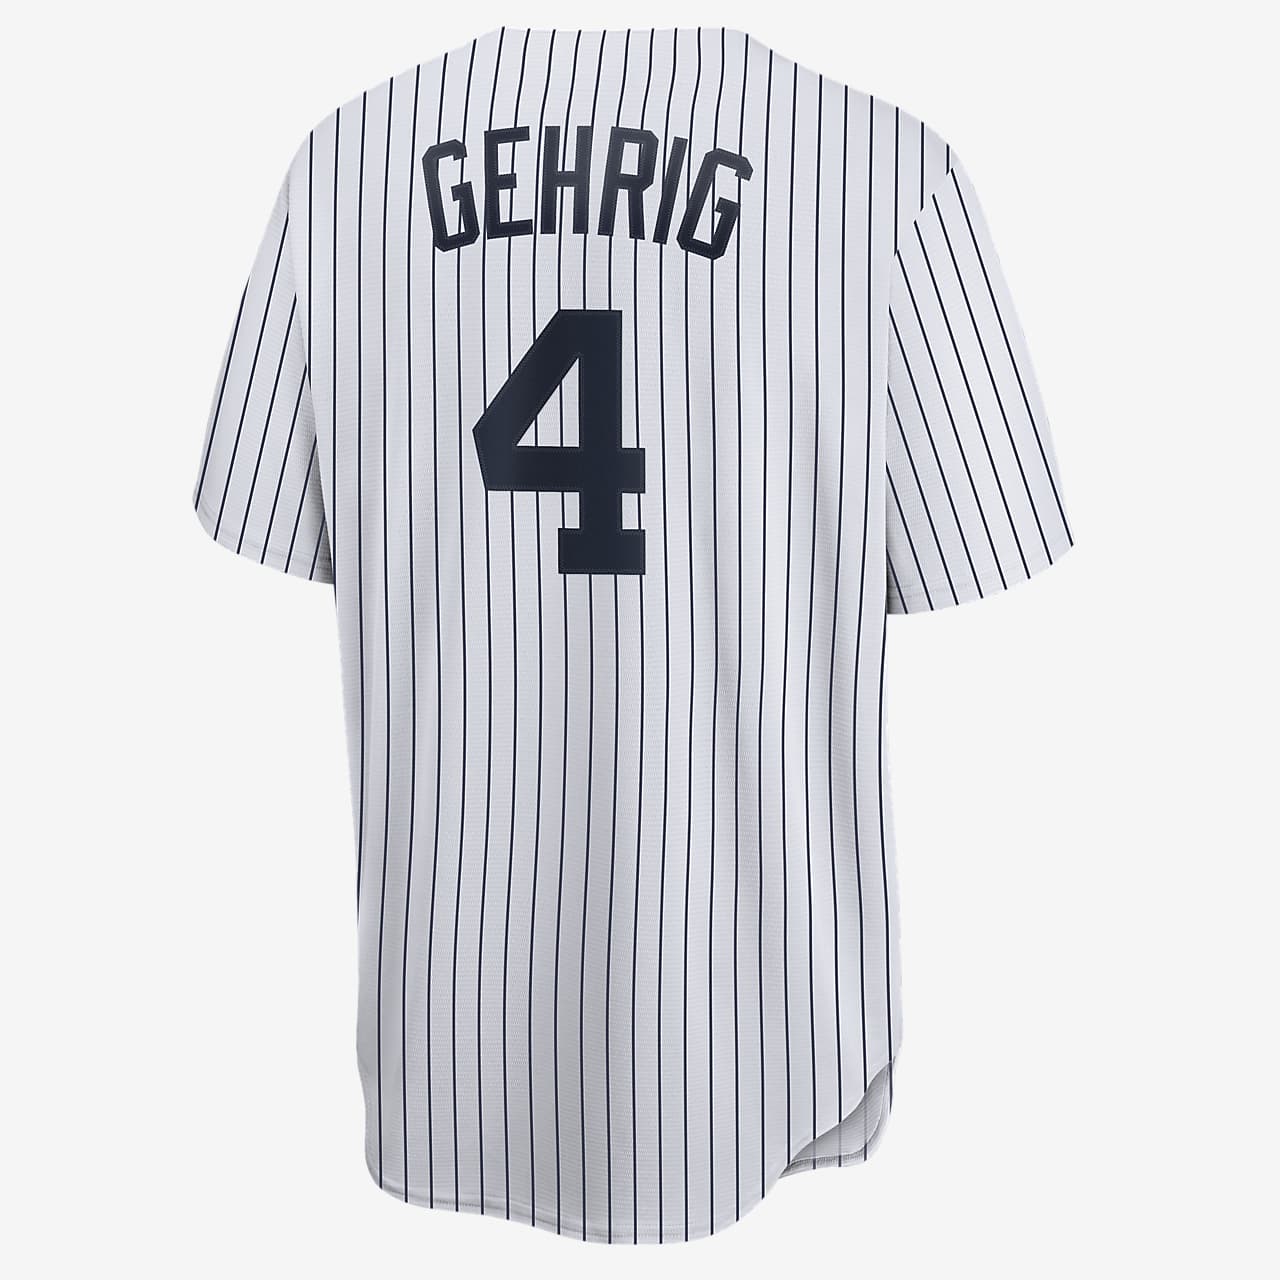 MLB New York Yankees (Lou Gehrig) Men's 